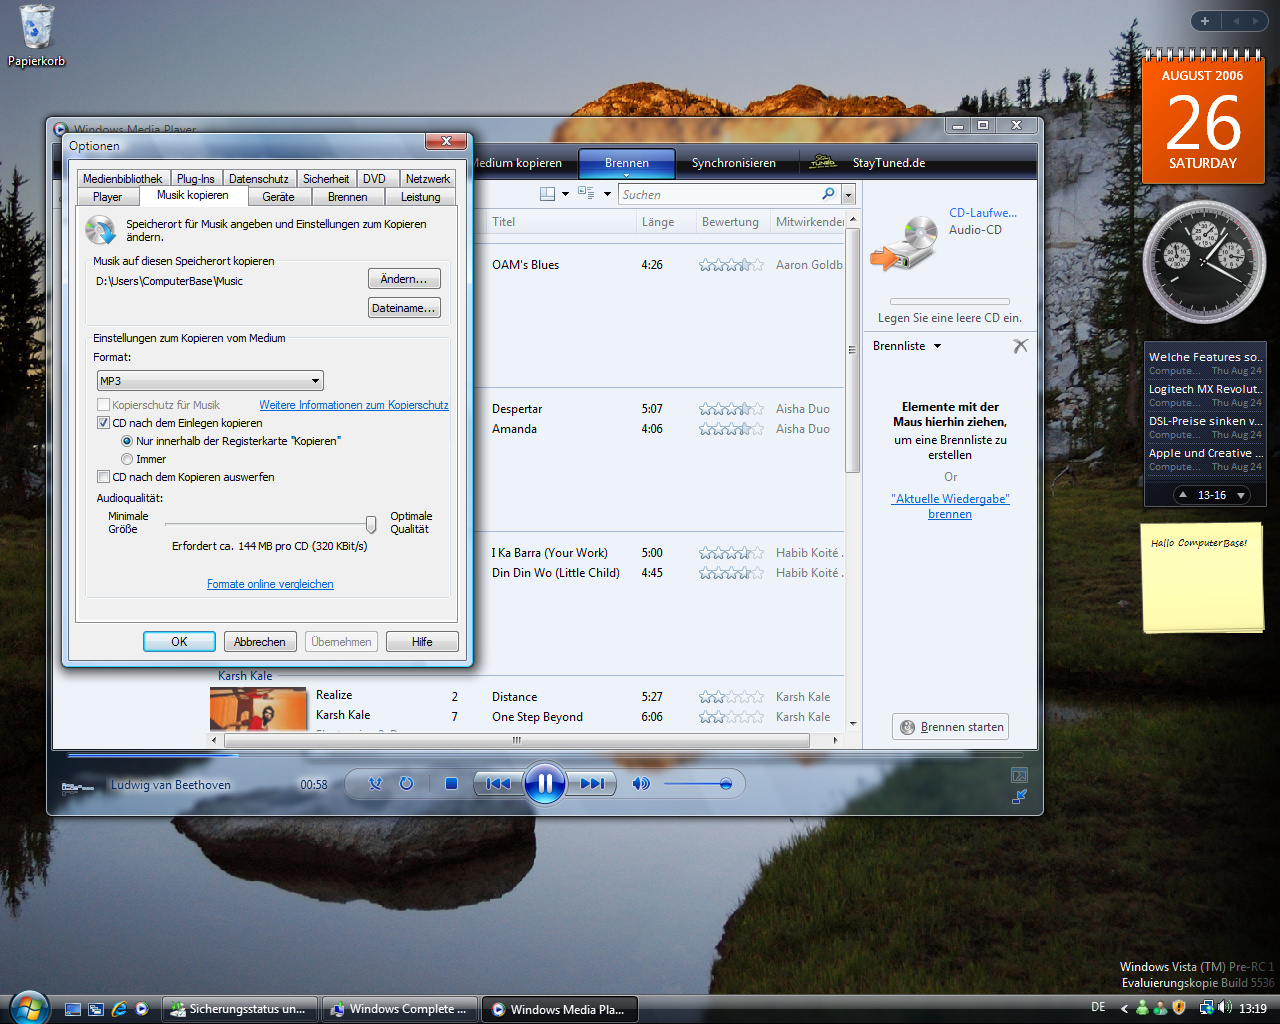 Windows Vista Build 5536 - Media Player 11 mit vollem MP3-Encode-Support